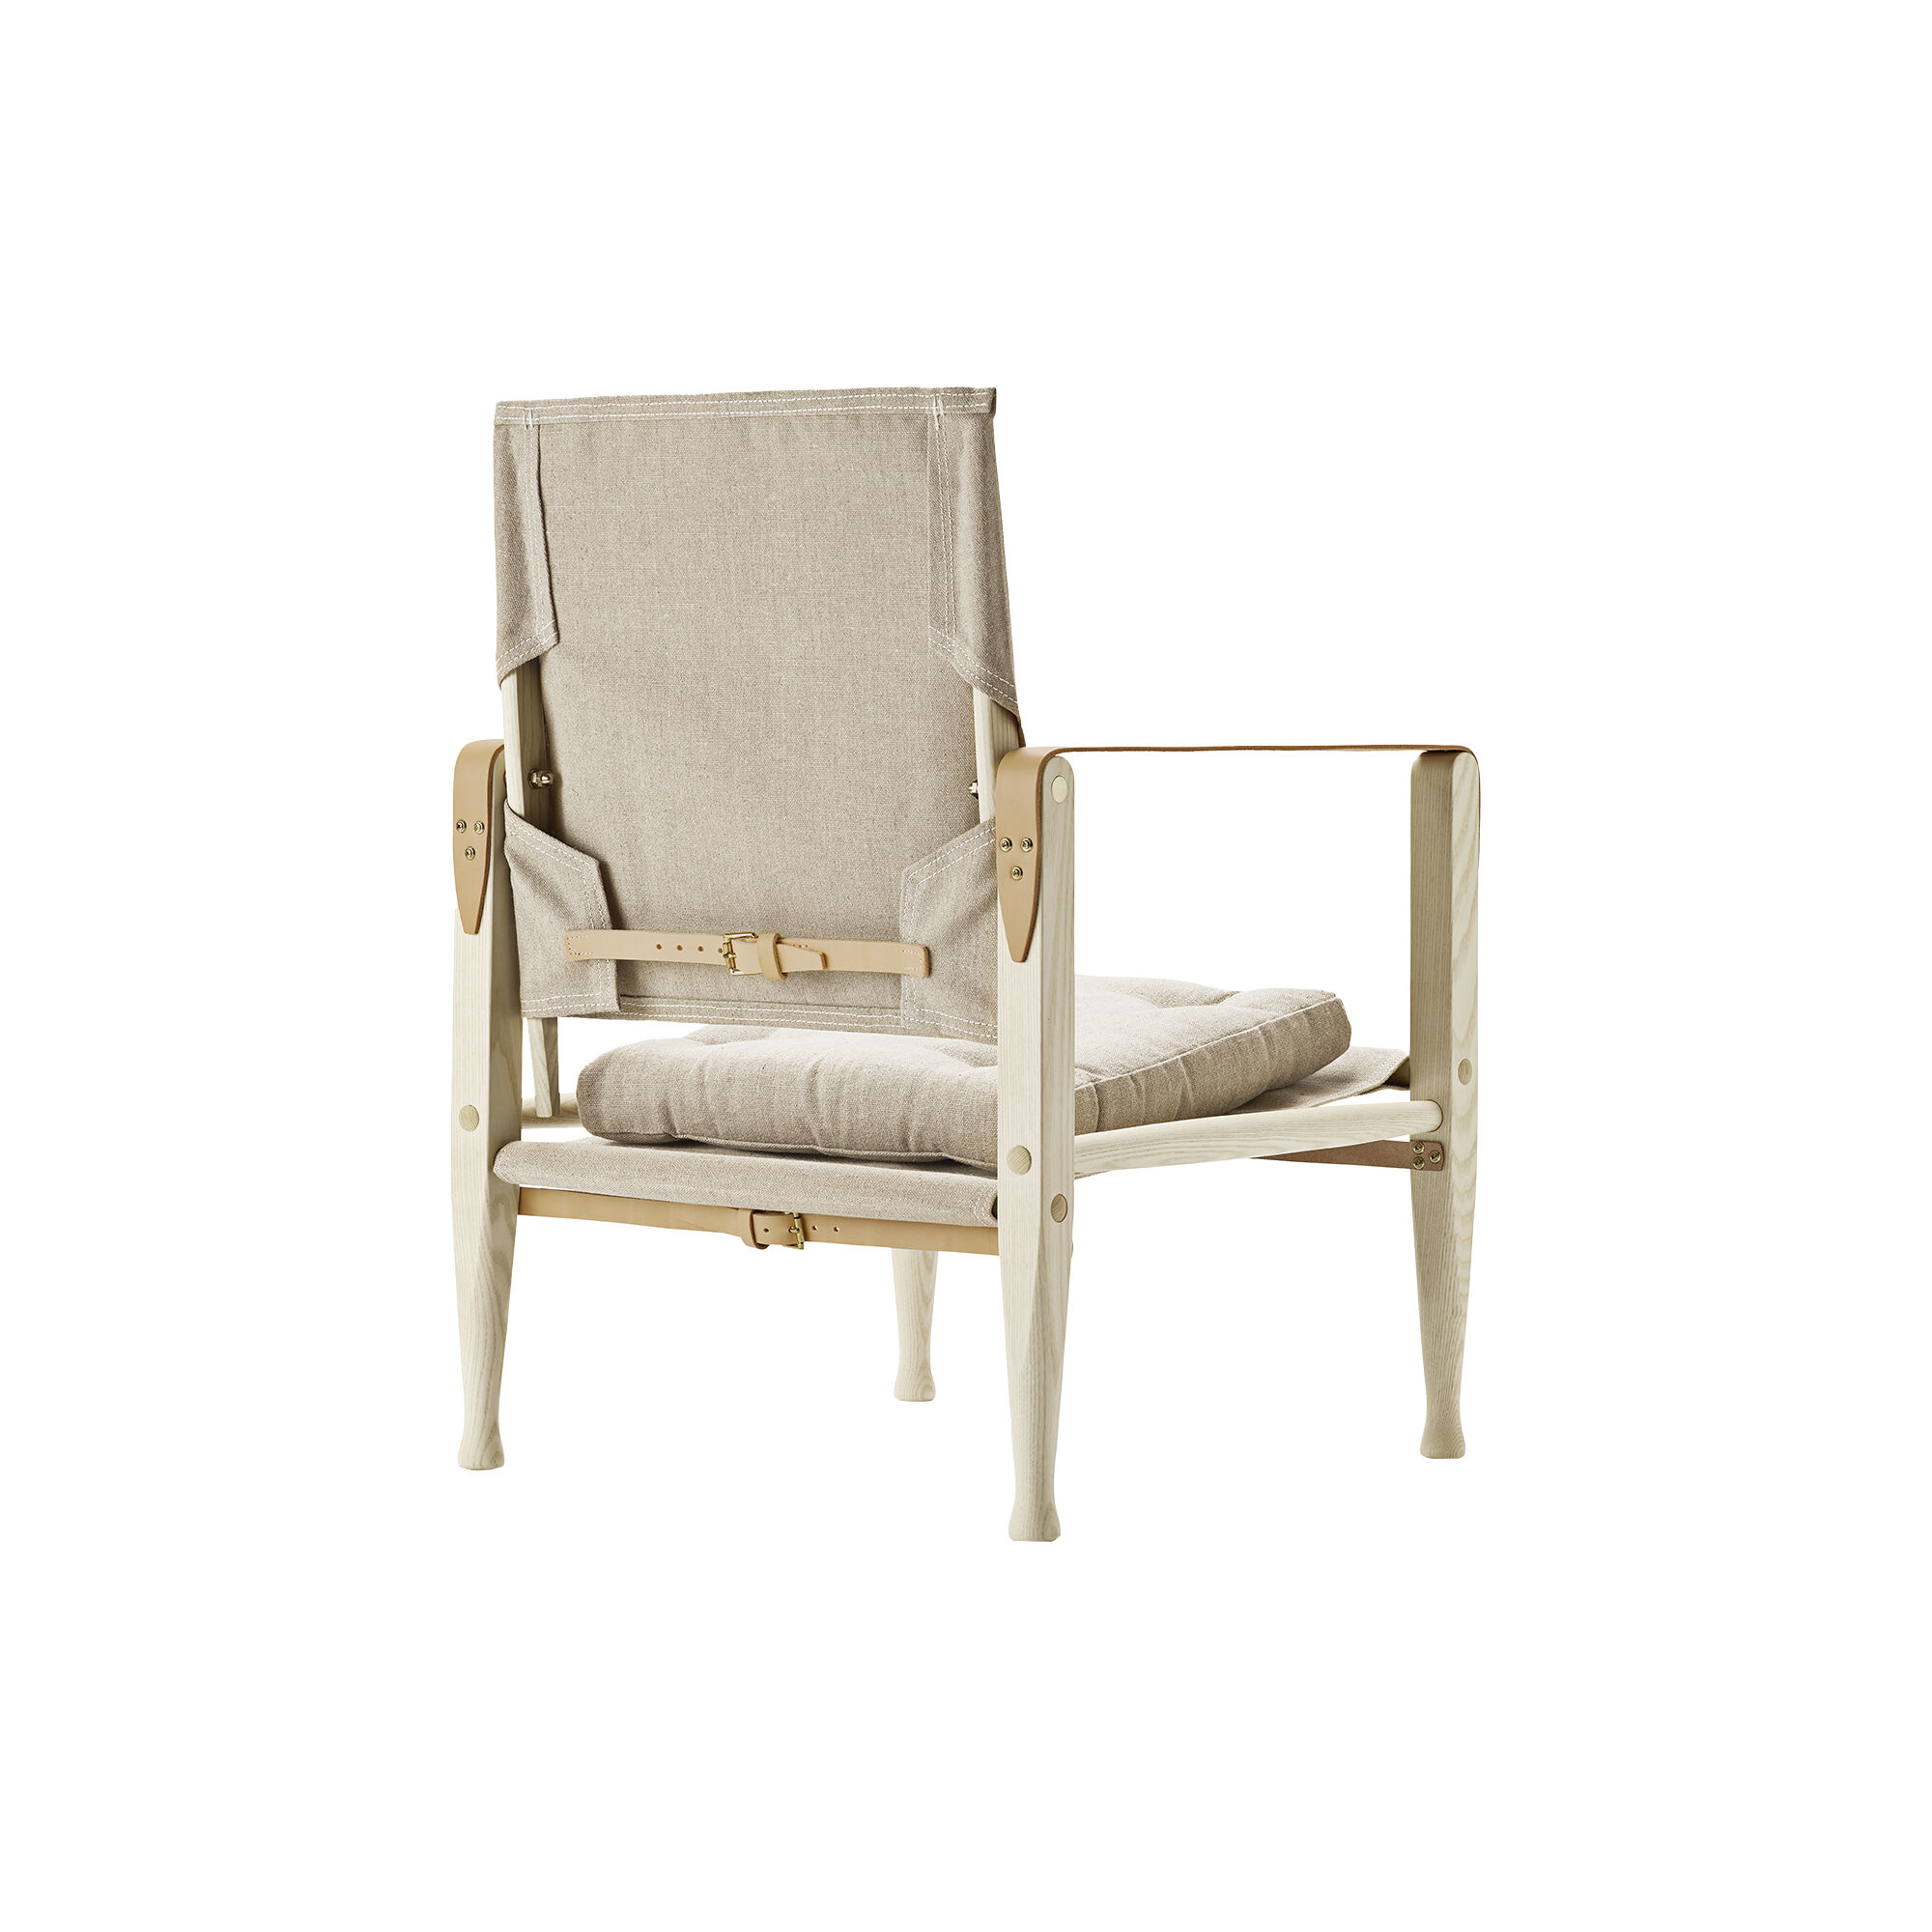 KK47000 Safari Chair, white oiled ash/natural